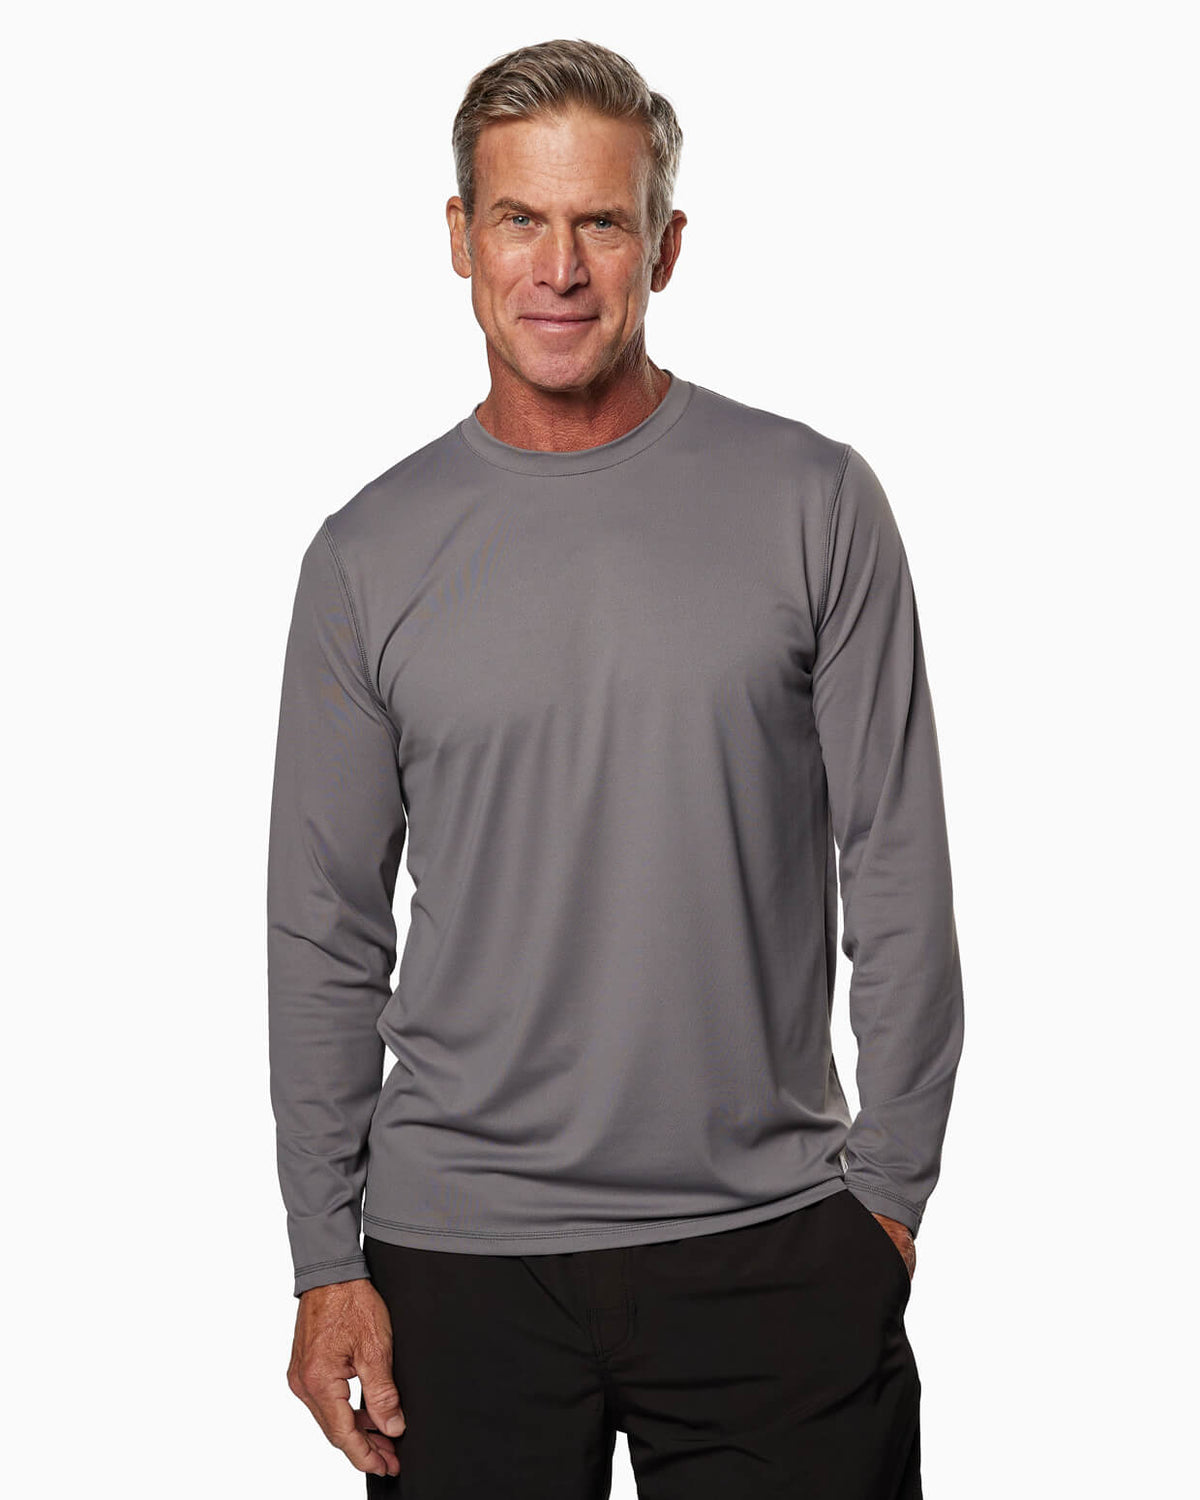 Protector Element Guard | UPF 50+ Long Sleeve UV Protective Shirt GREY  front #color_grey